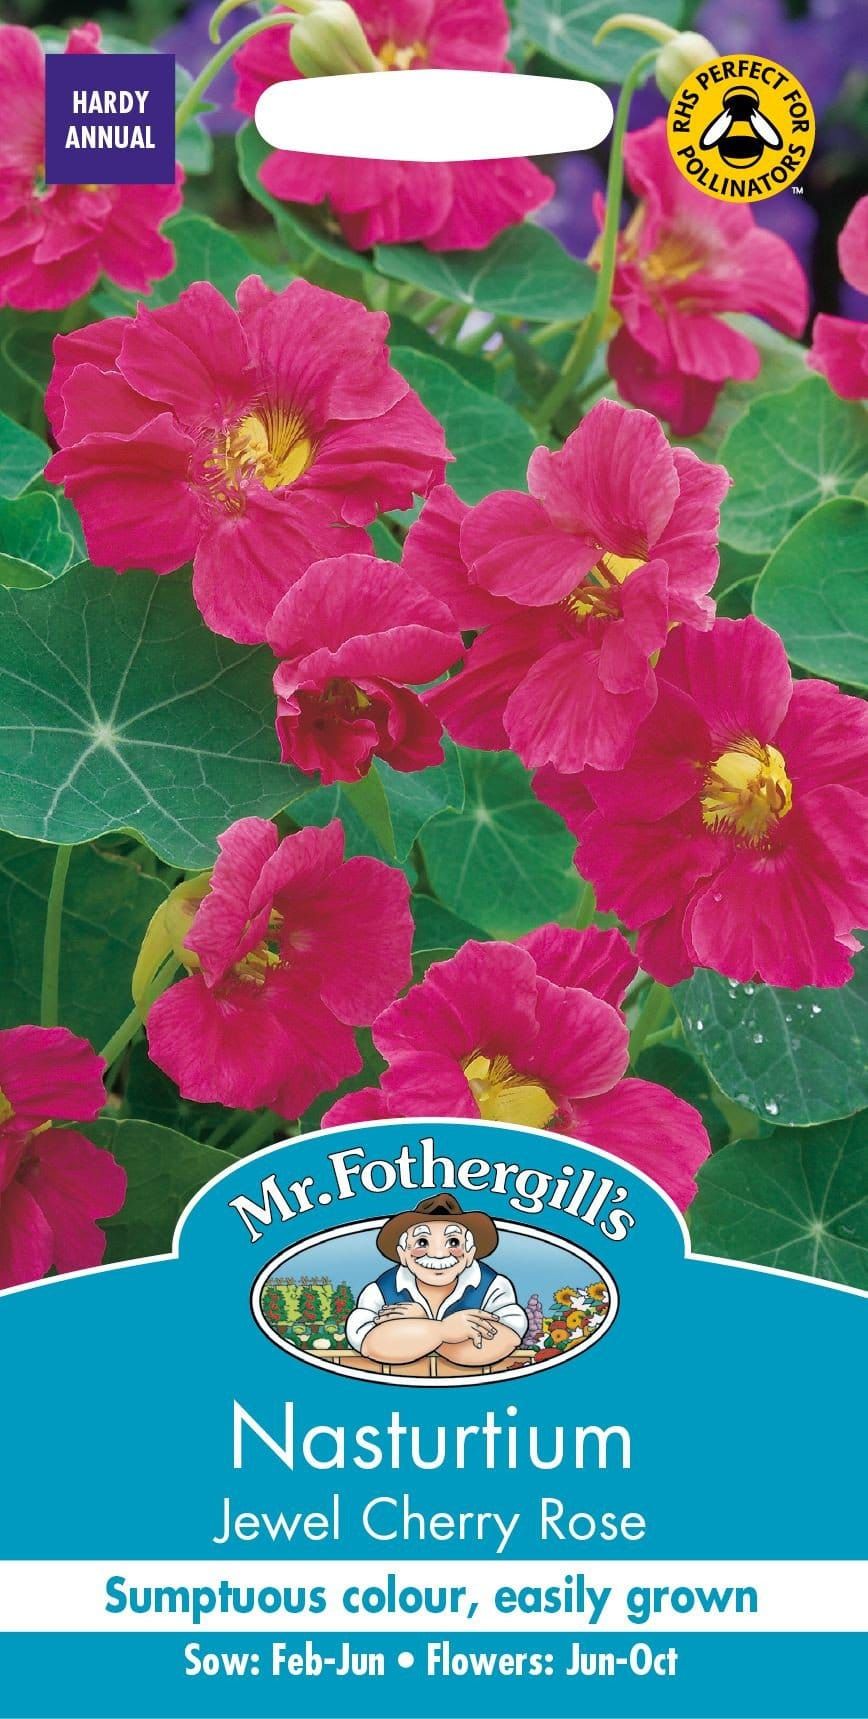 Mr Fothergills Nasturtium Jewel Cherry Rose 25 Seeds